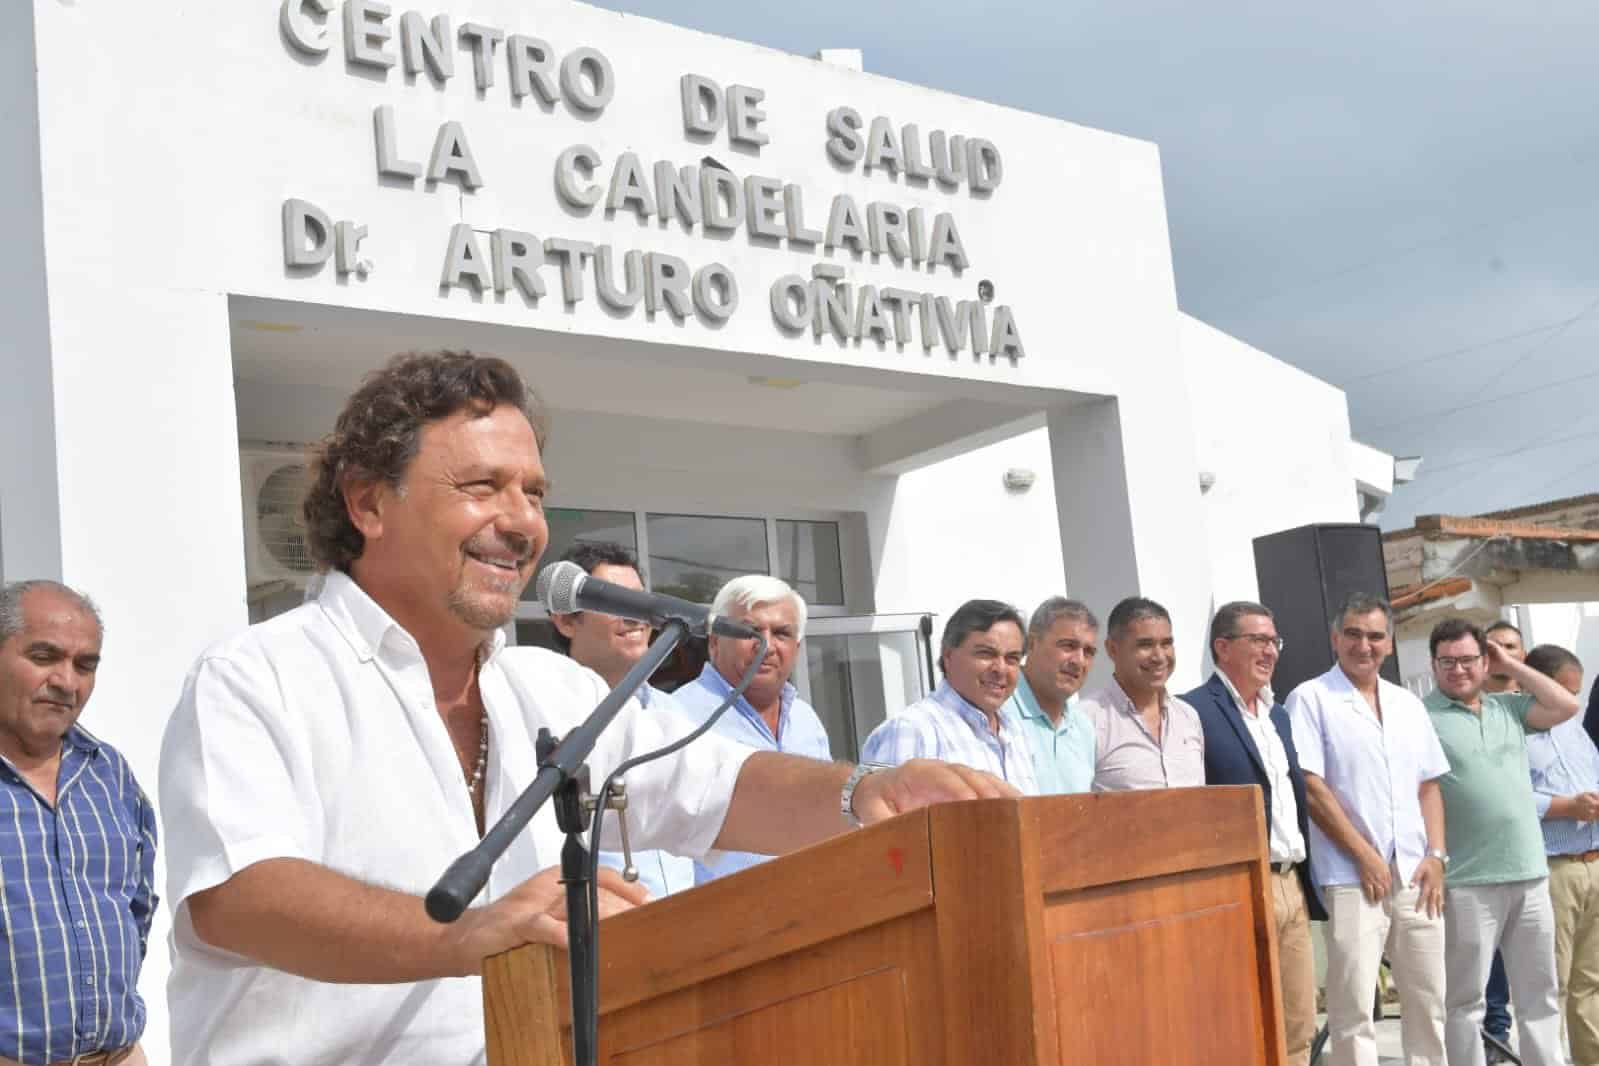 Gustavo Sáenz - La Candelaria